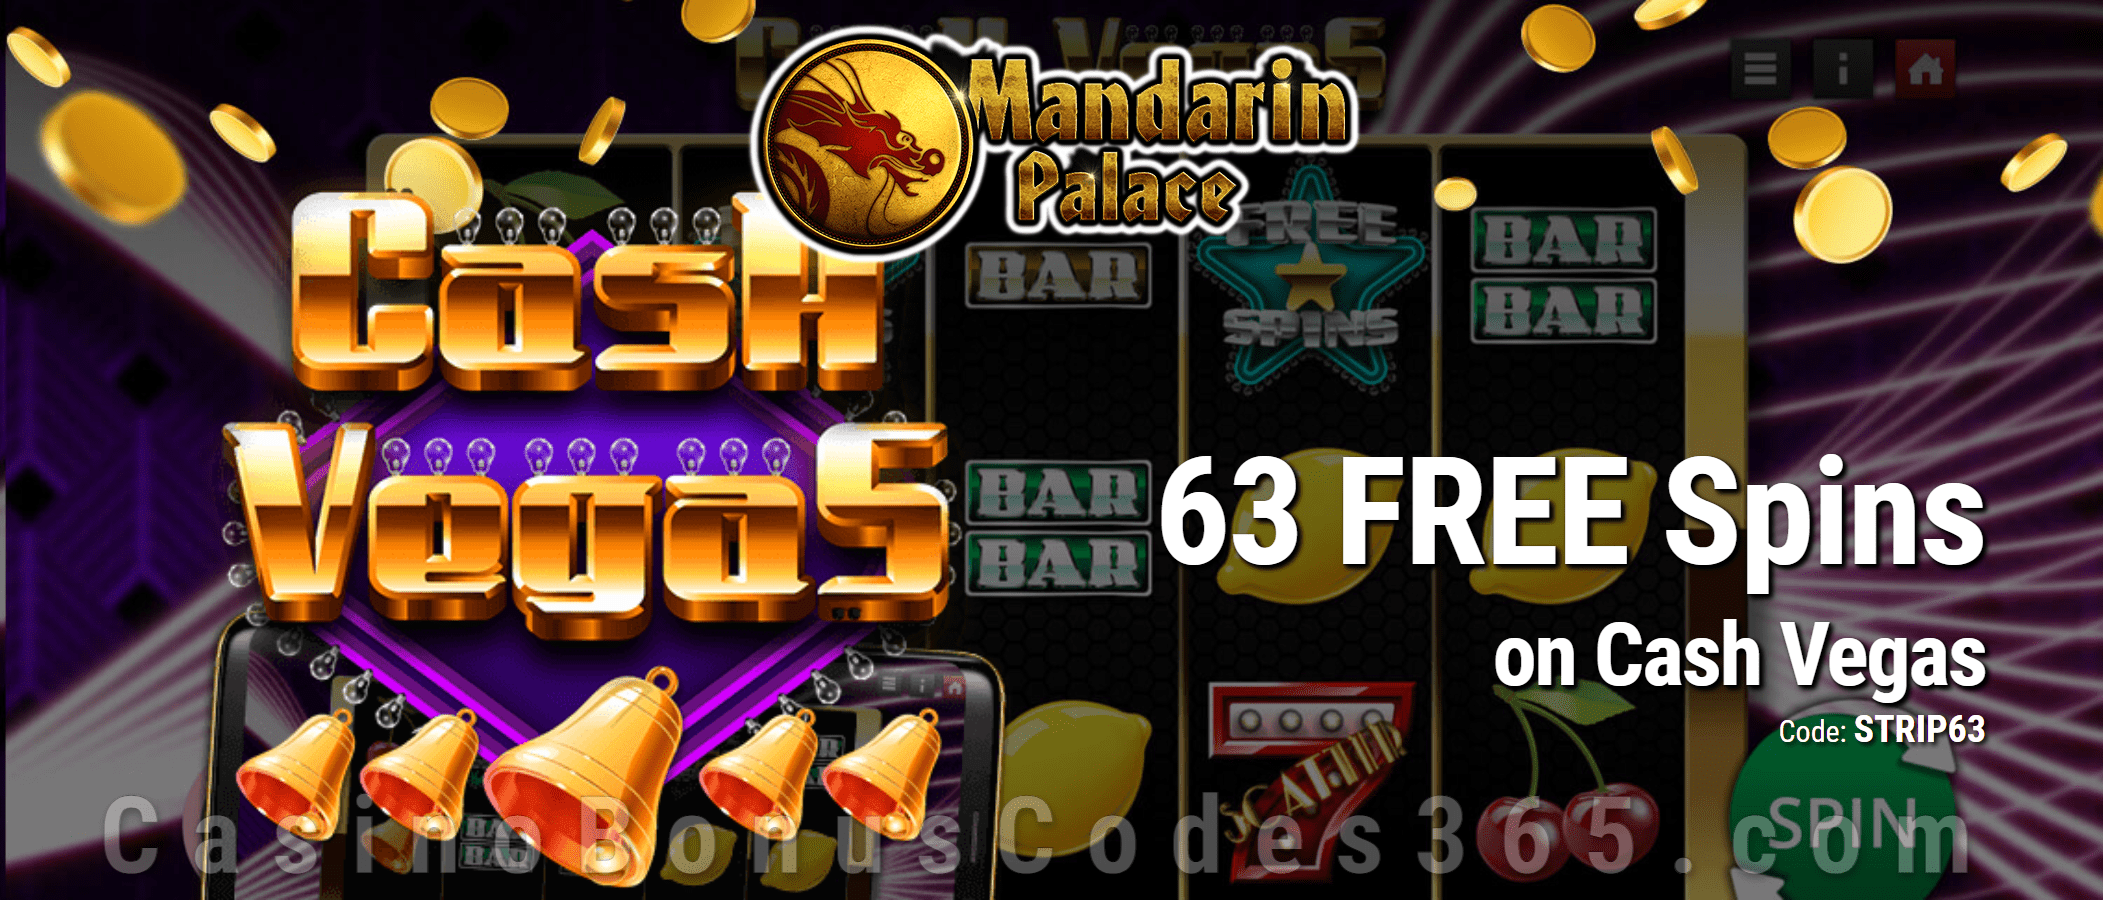 Mandarin palace casino review